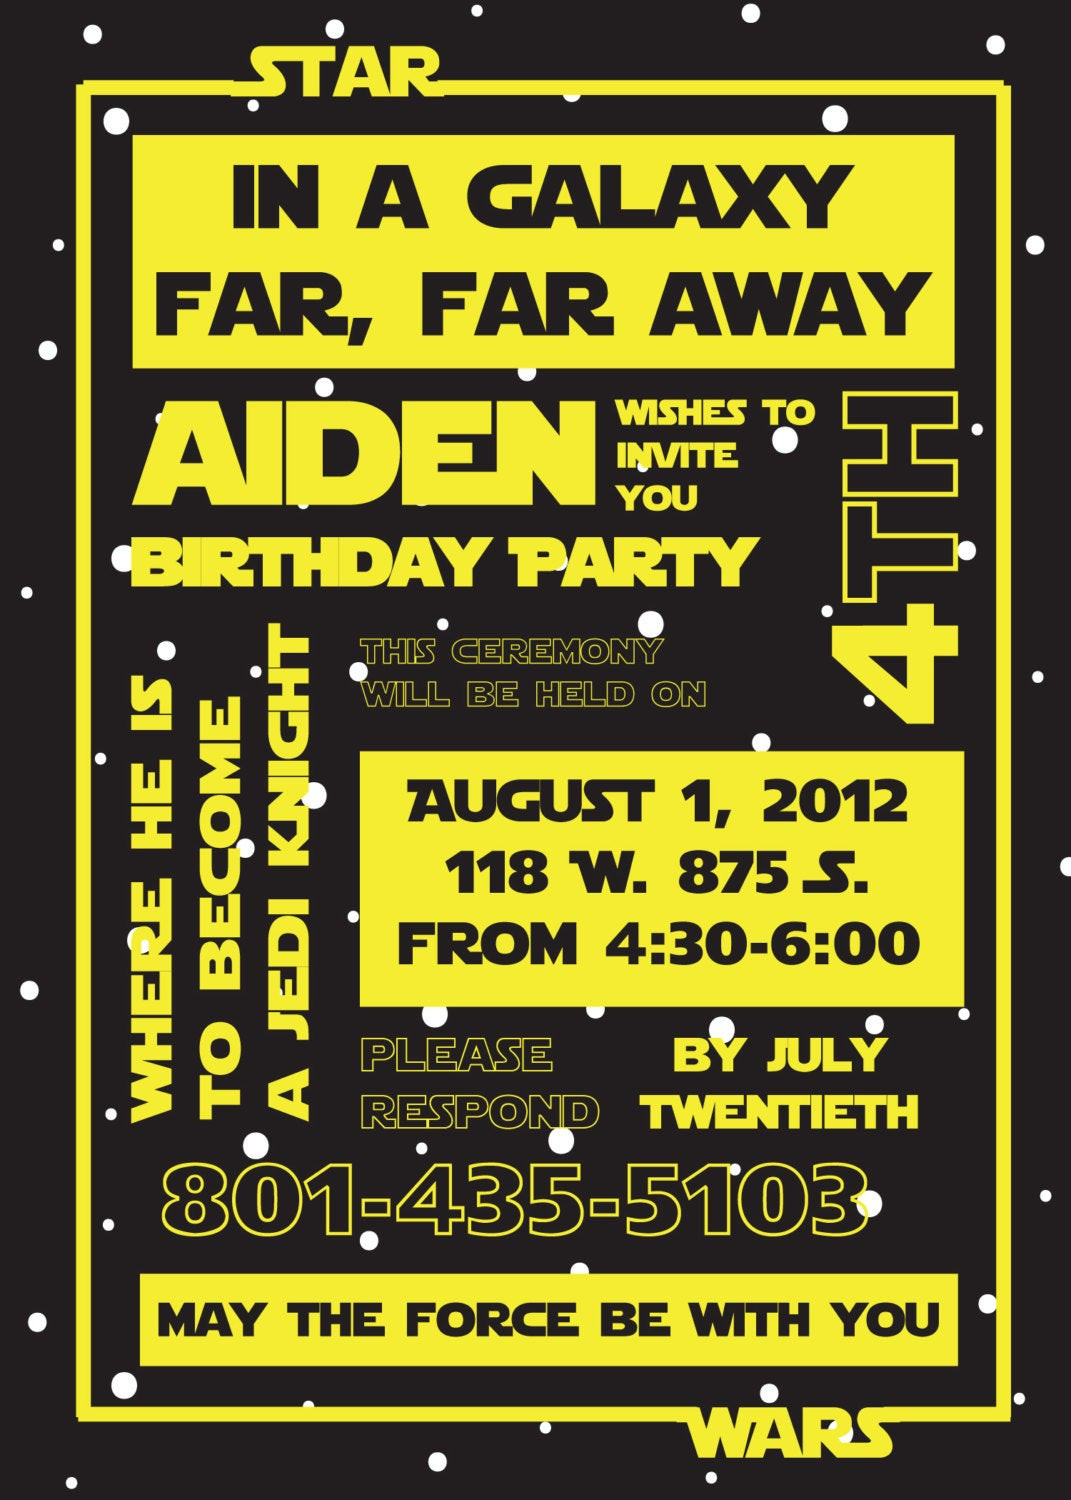 Star Wars Birthday Party Invitations
 Printable Star Wars Invitation and Party Banner by susieandme